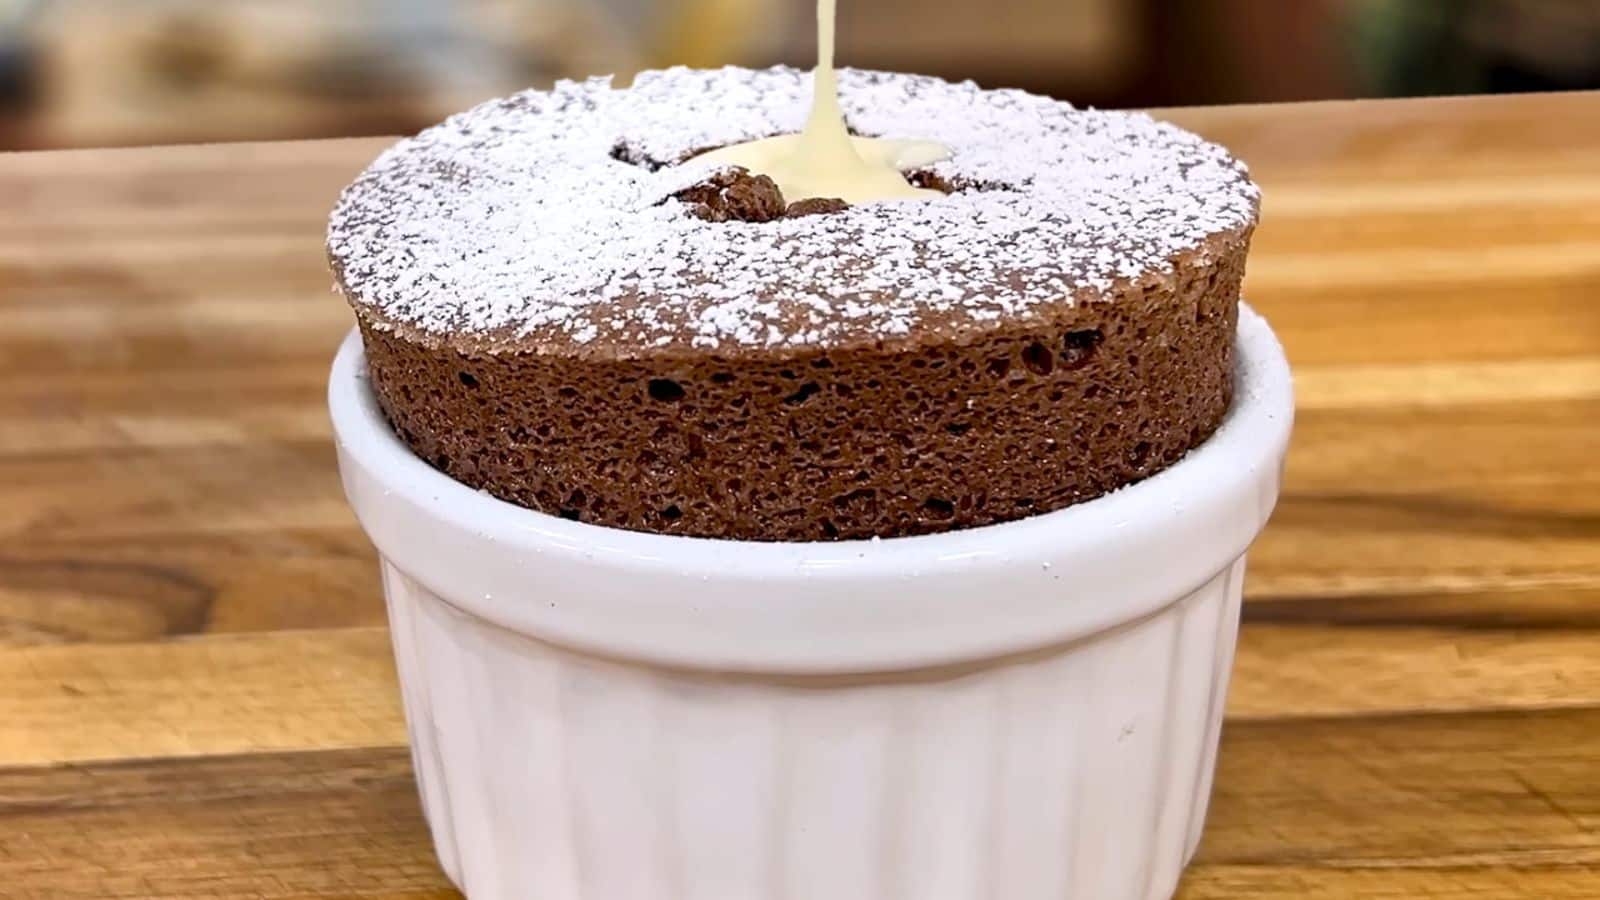 Recipe-o'-clock: Make this vegetarian French chocolate souffle